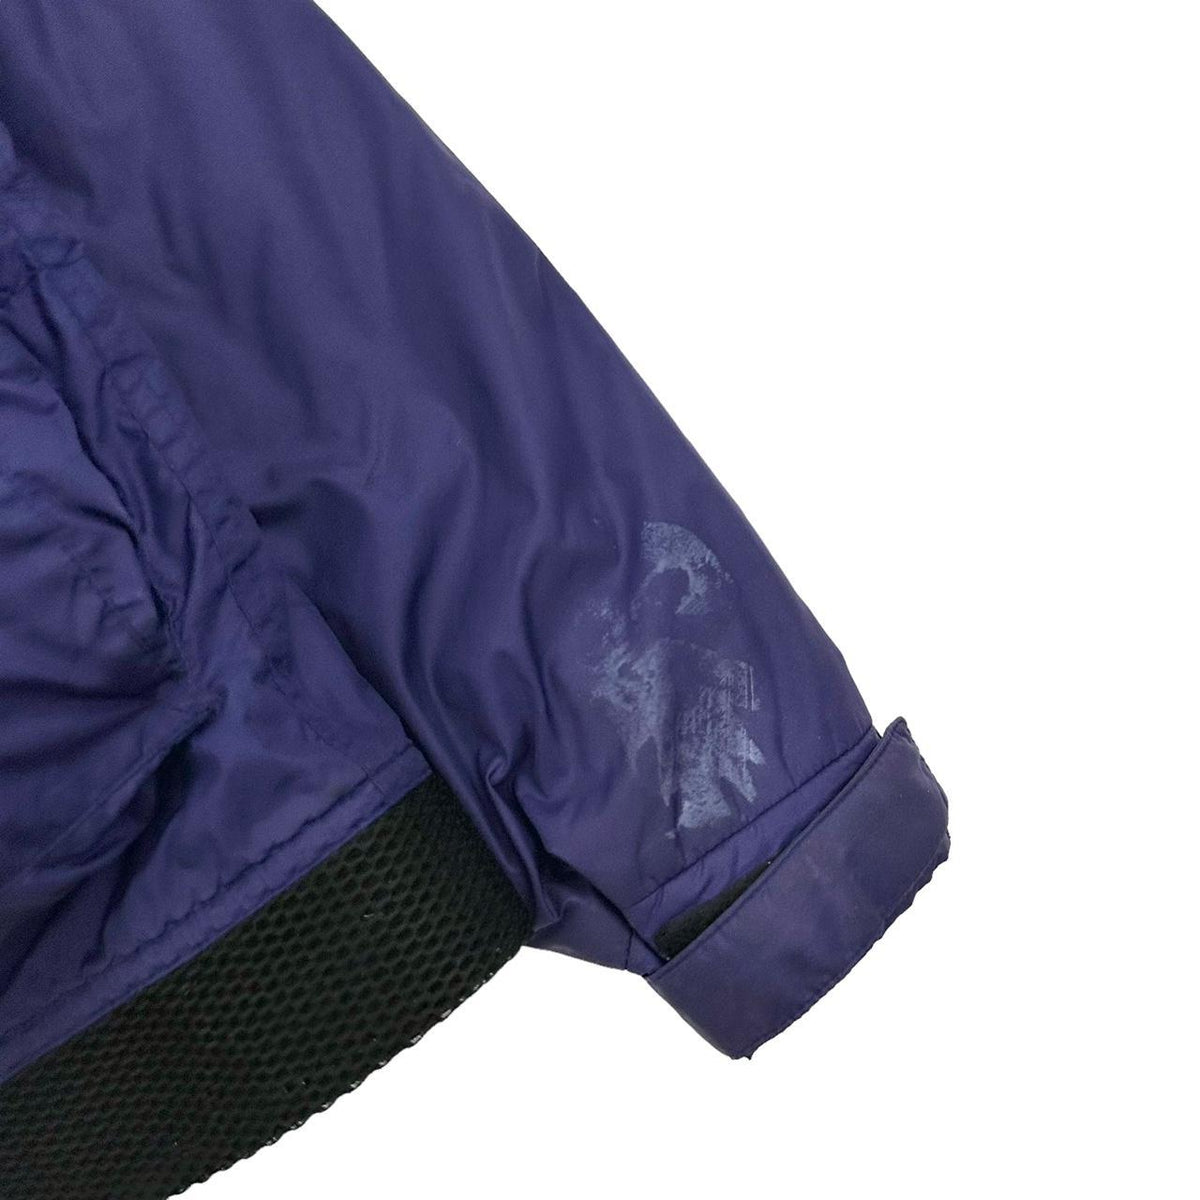 Vintage Burberry Sport pocket jacket size XS